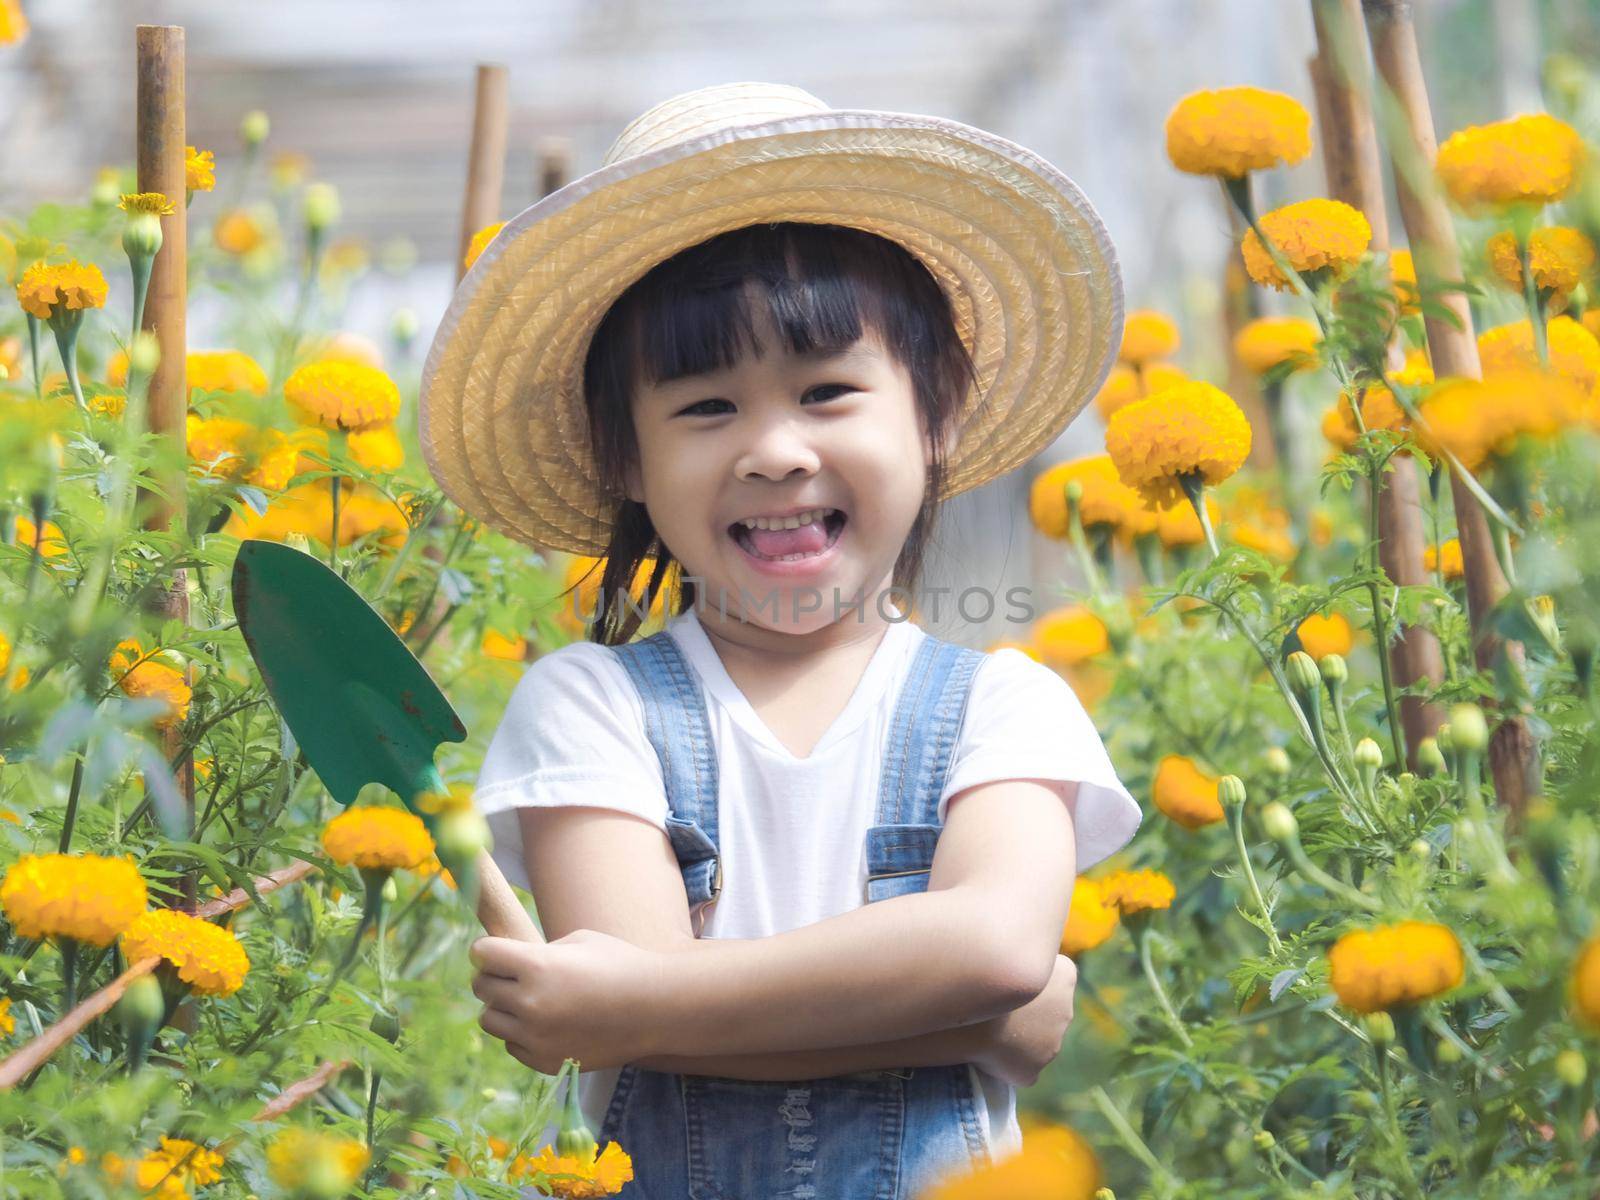 Cute little girl in hat holding garden tool shovel for planting flowers in the garden. A child helps mom in the garden, a little gardener. by TEERASAK